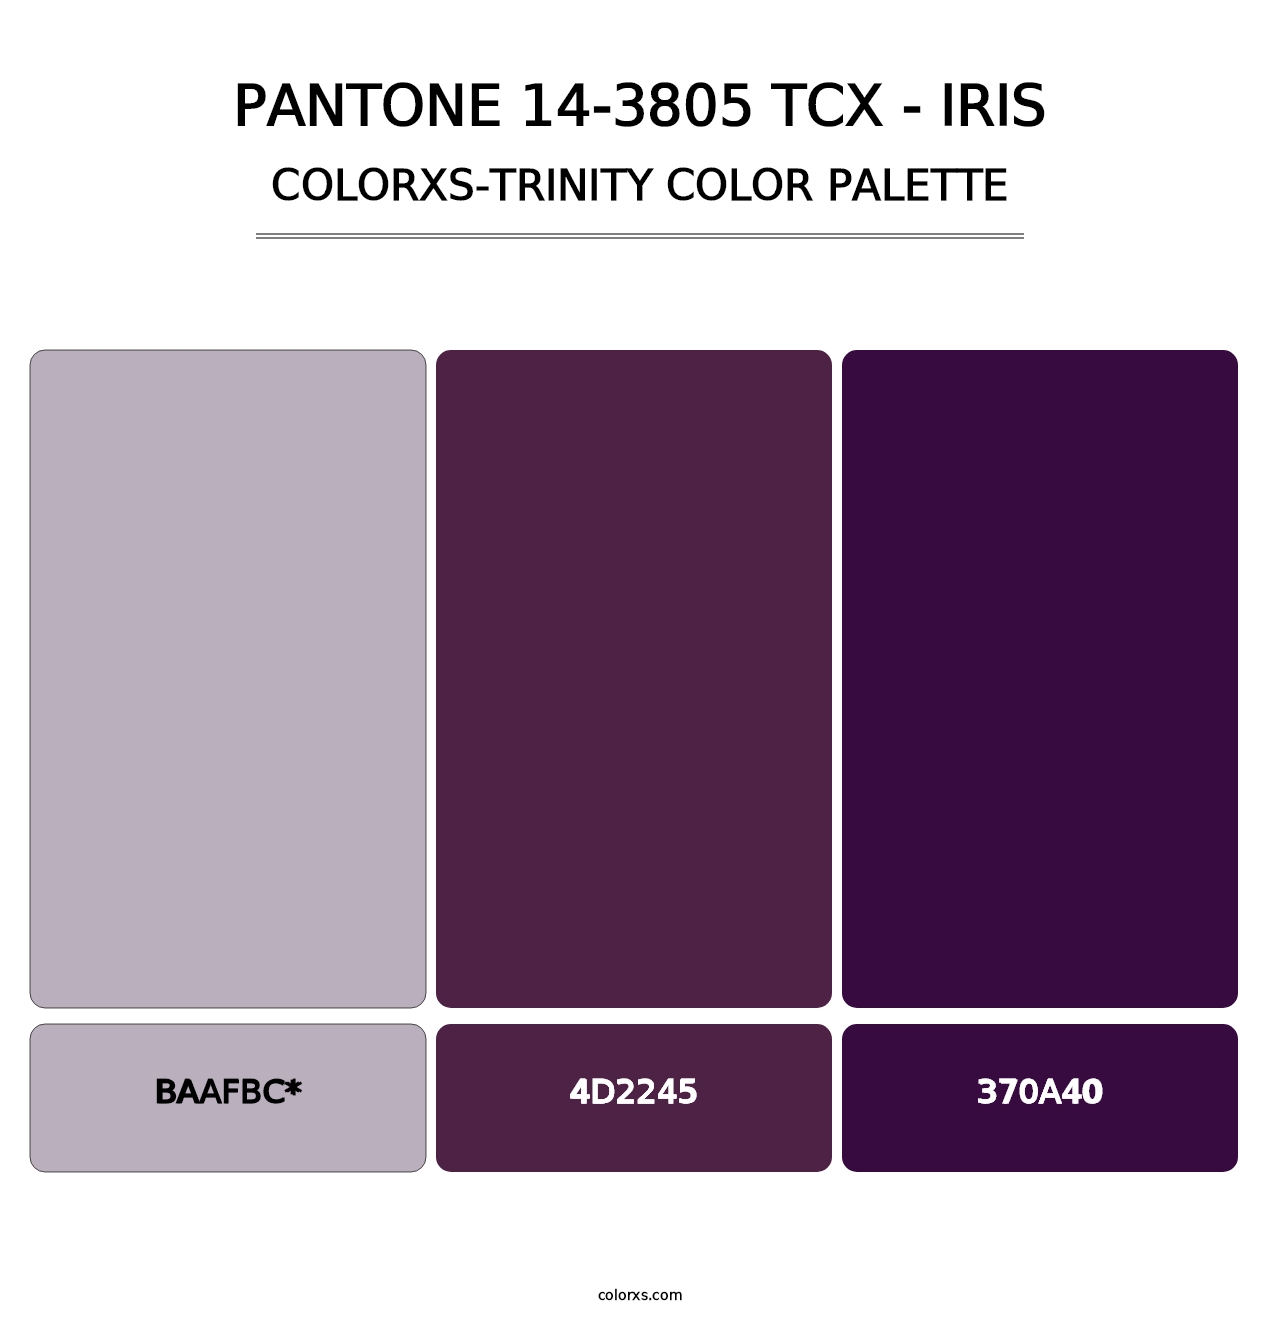 PANTONE 14-3805 TCX - Iris - Colorxs Trinity Palette